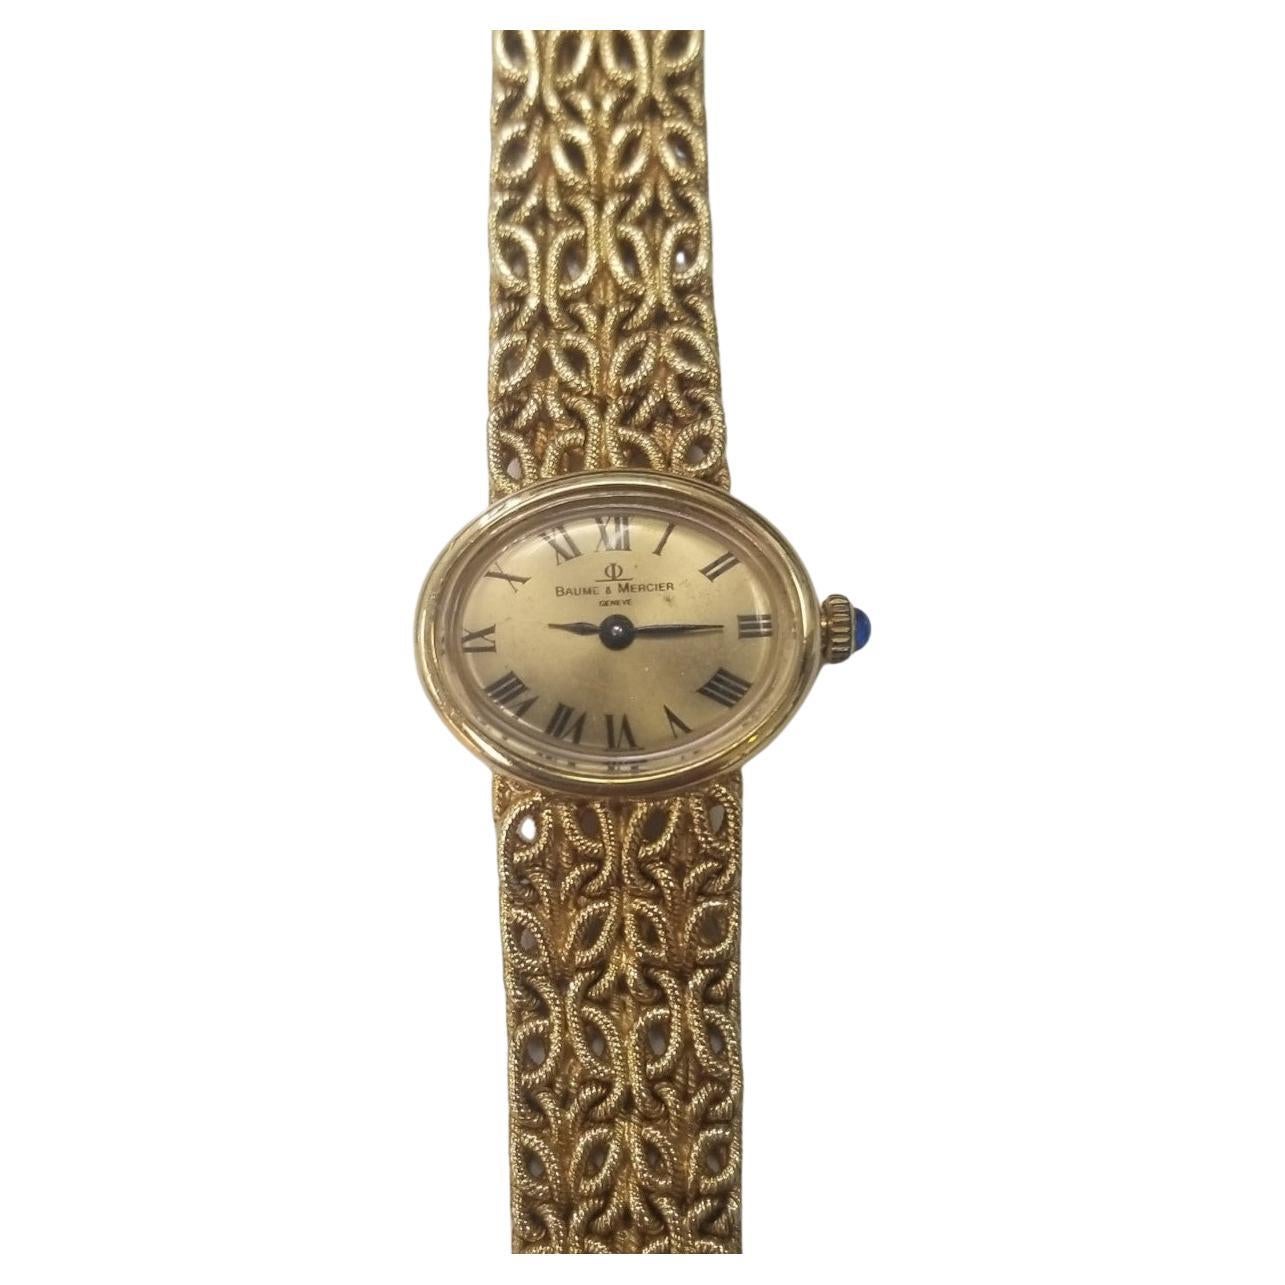 Vintage Baume & Mercier 18k Solid Yellow Gold Analog Byzantine Style Watch